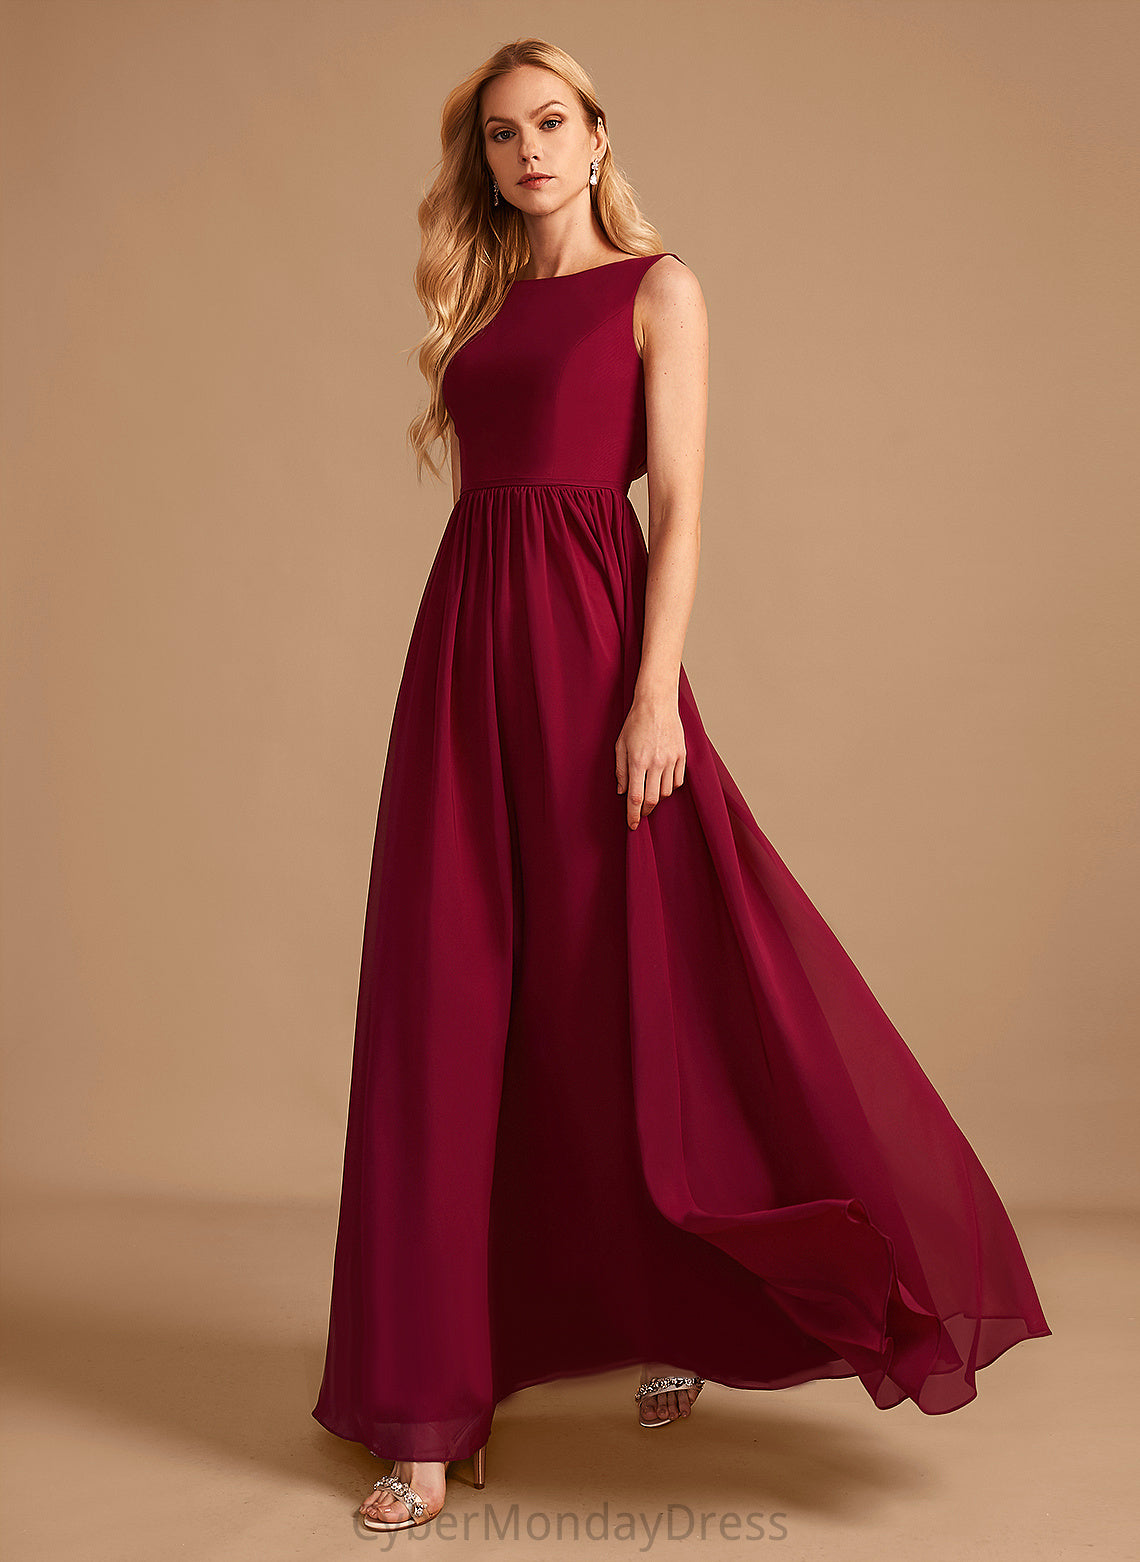 Silhouette HighNeck Neckline Length Floor-Length A-Line Embellishment Bow(s) Fabric Eliza Bridesmaid Dresses